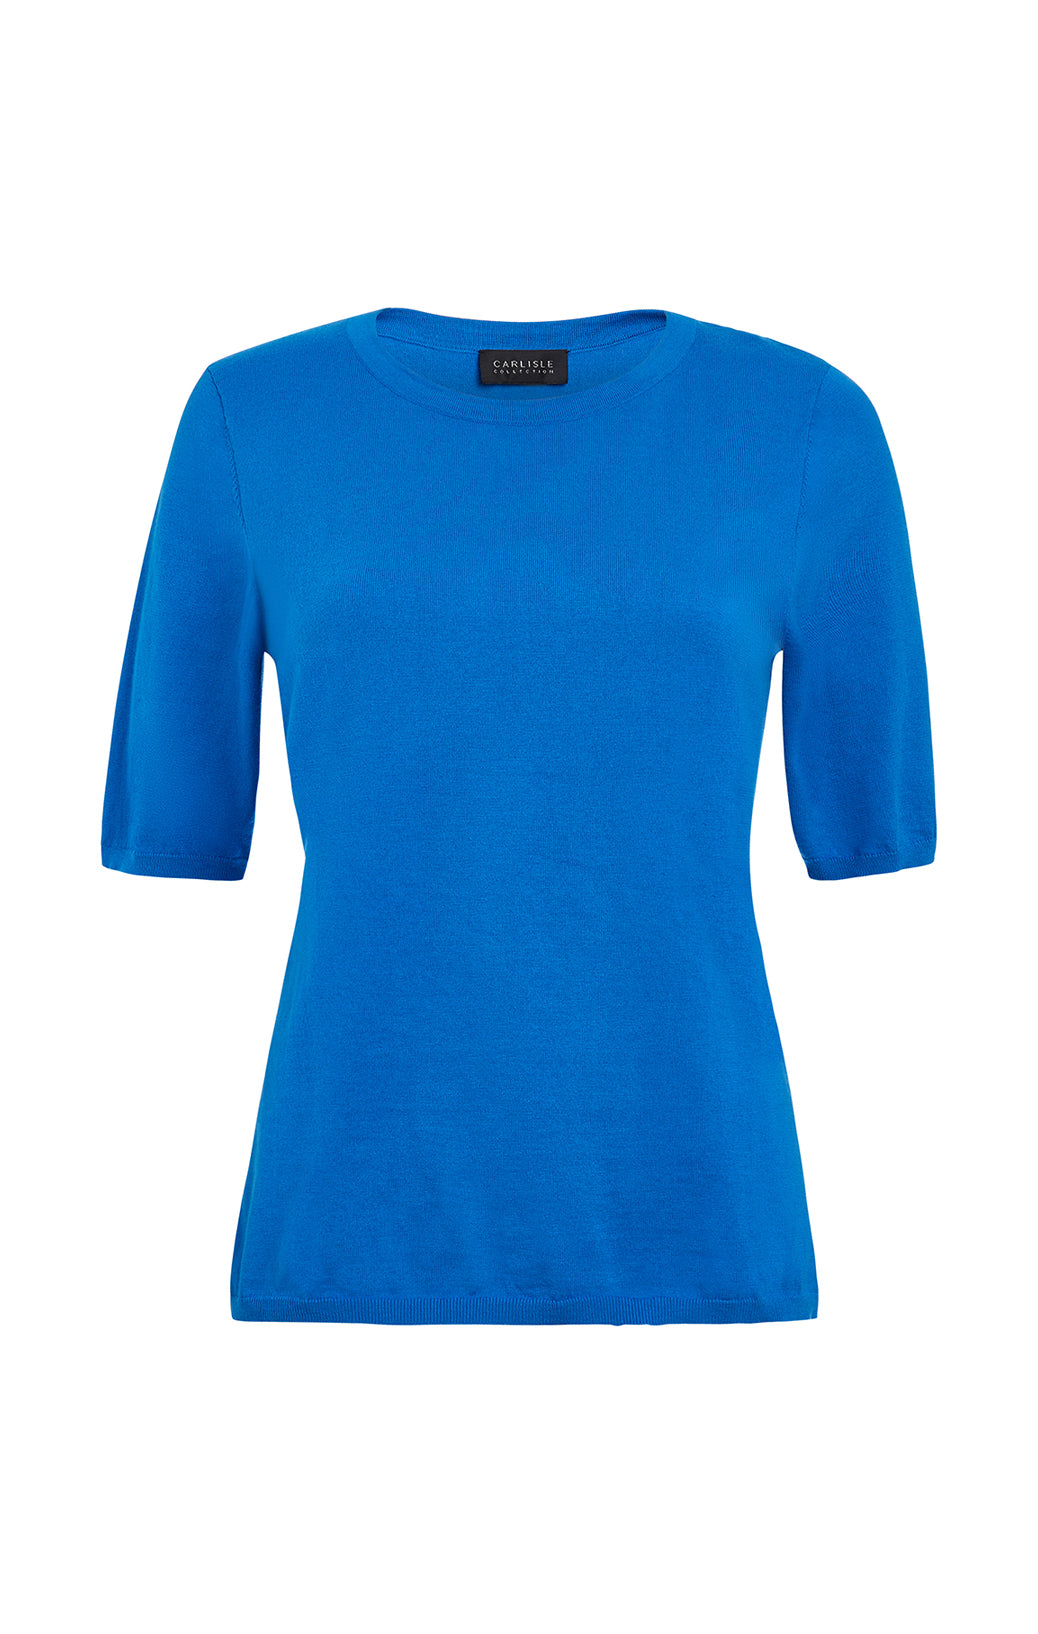 Thalia - Crisscross Jersey Tee Shirt - Product Image